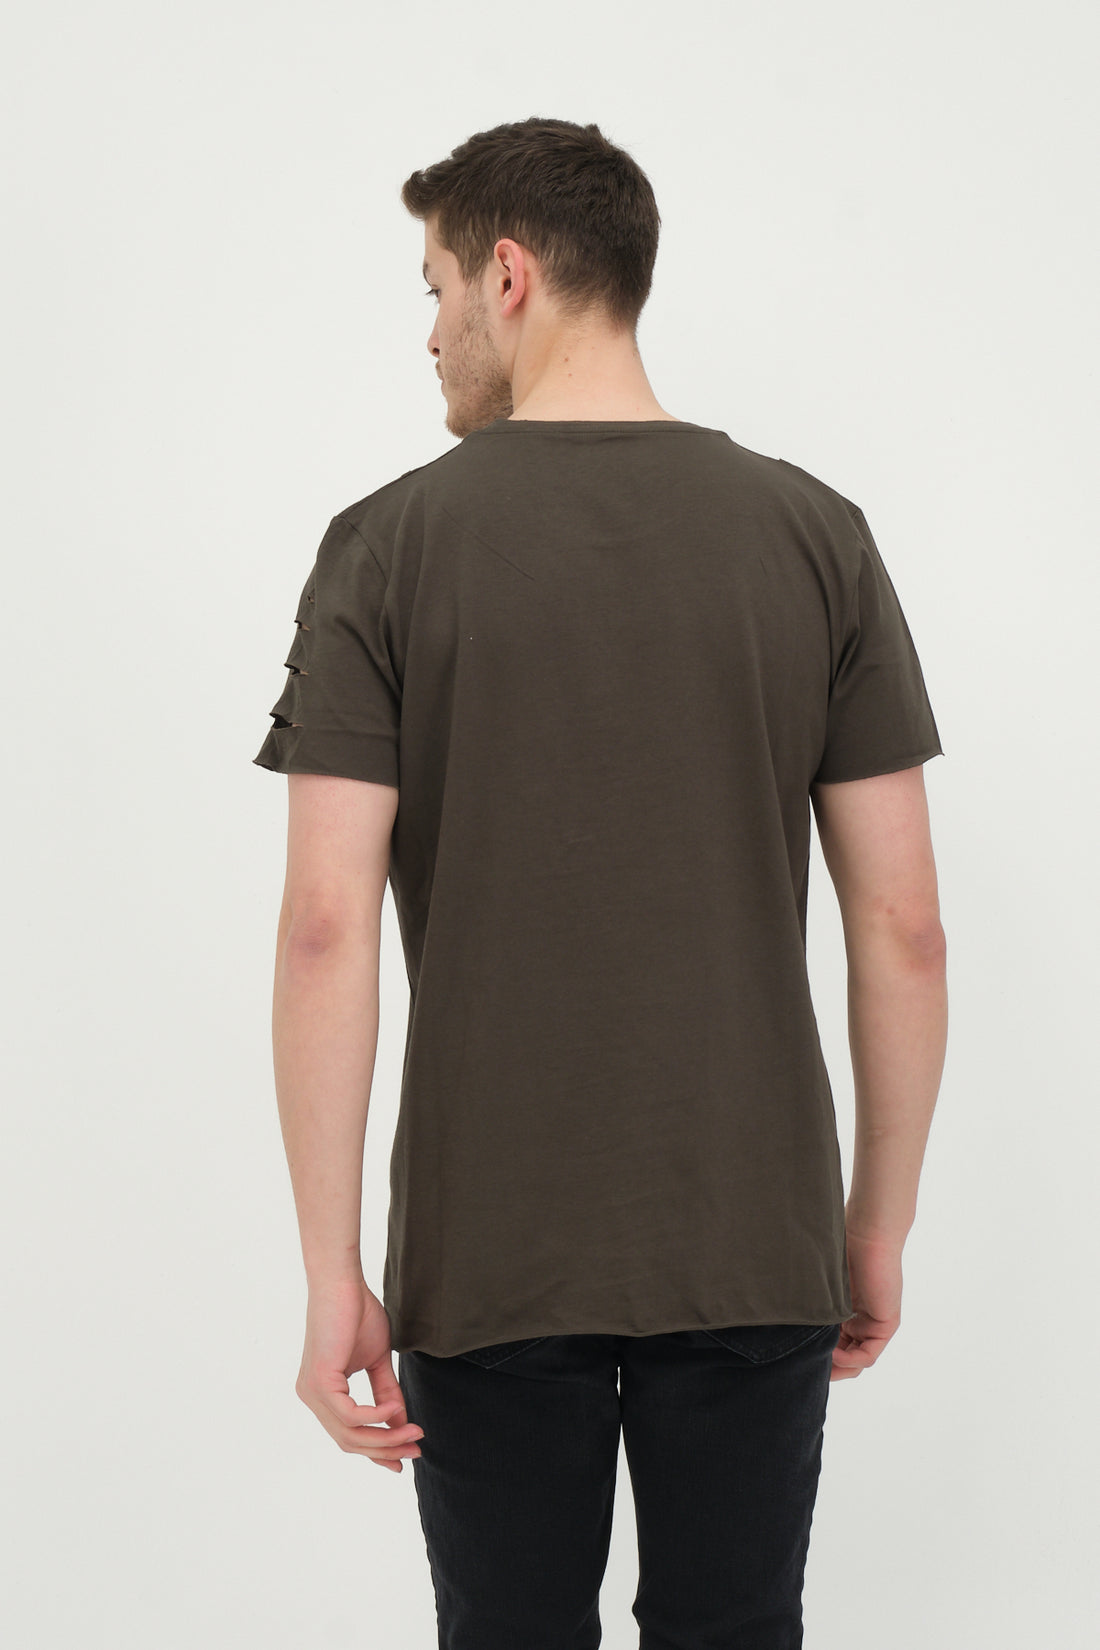 N° 8195 T-Shirt -Khaki - Ron Tomson